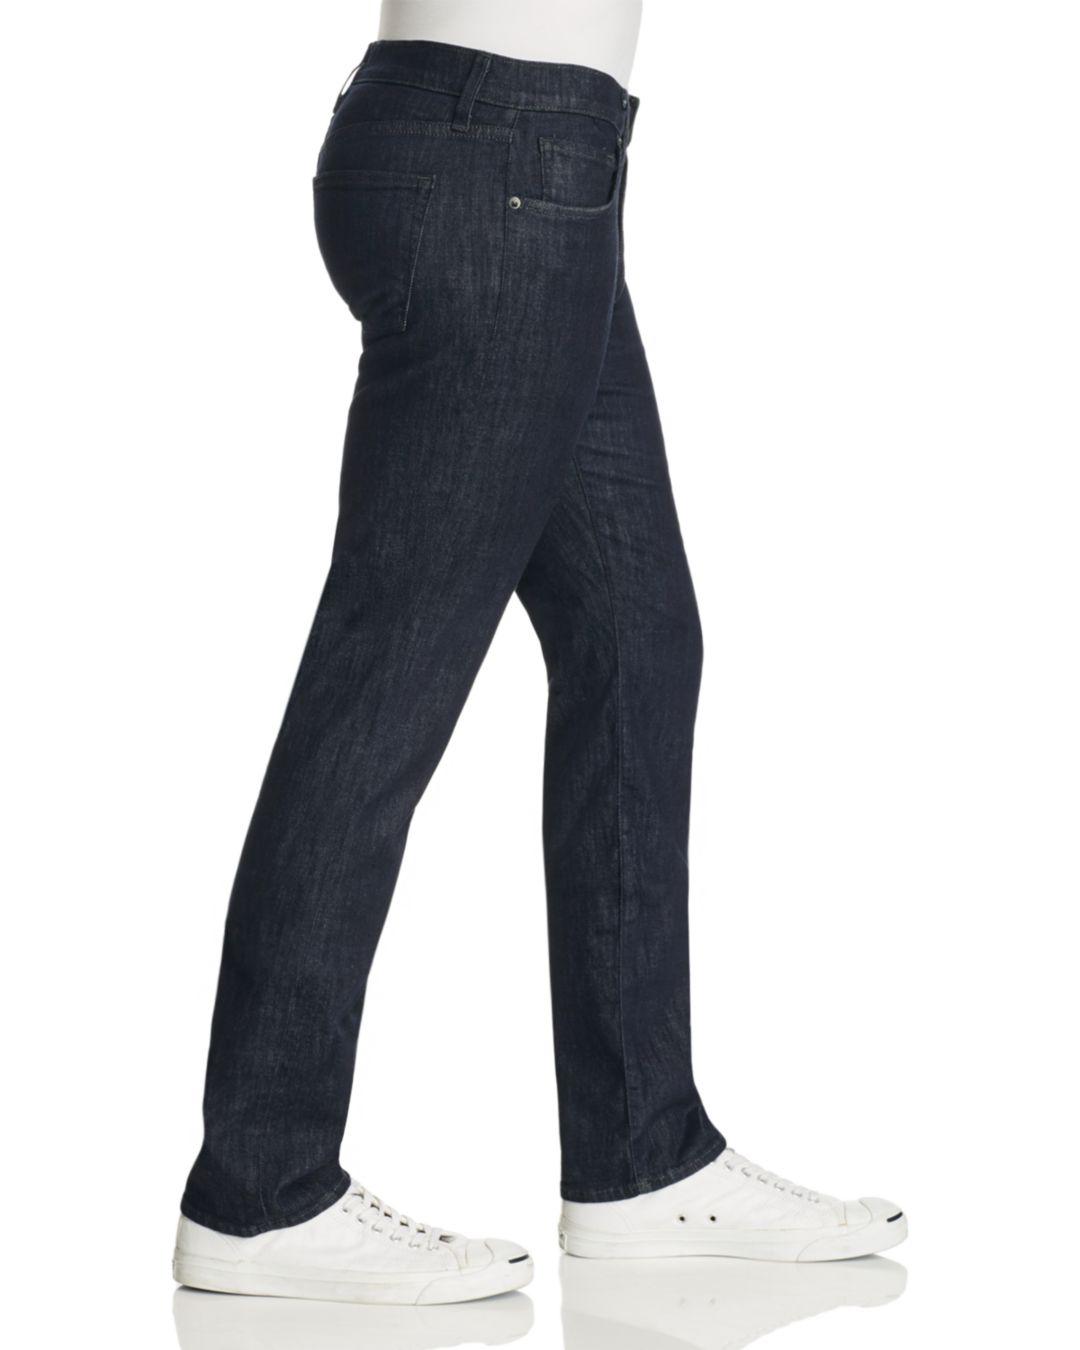 J Brand Denim Kane Slim Straight Fit Jeans In Hirsch in Blue for Men - Lyst